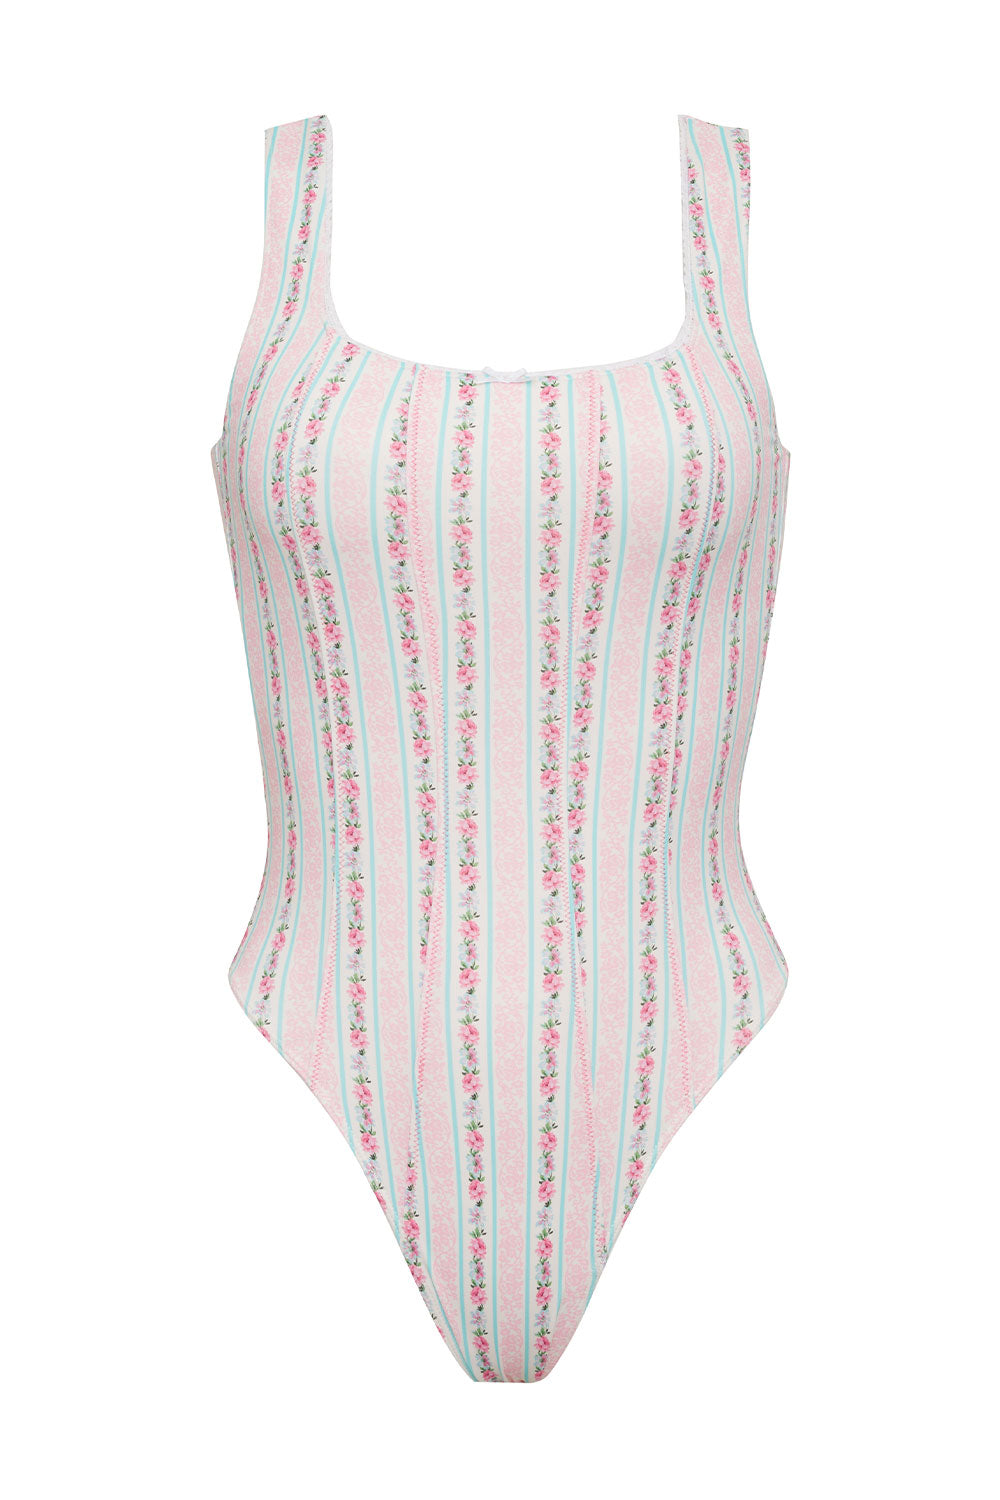 Buy One-Piece Swimsuit, Floral Monokini Swimsuit at LeStyleParfait